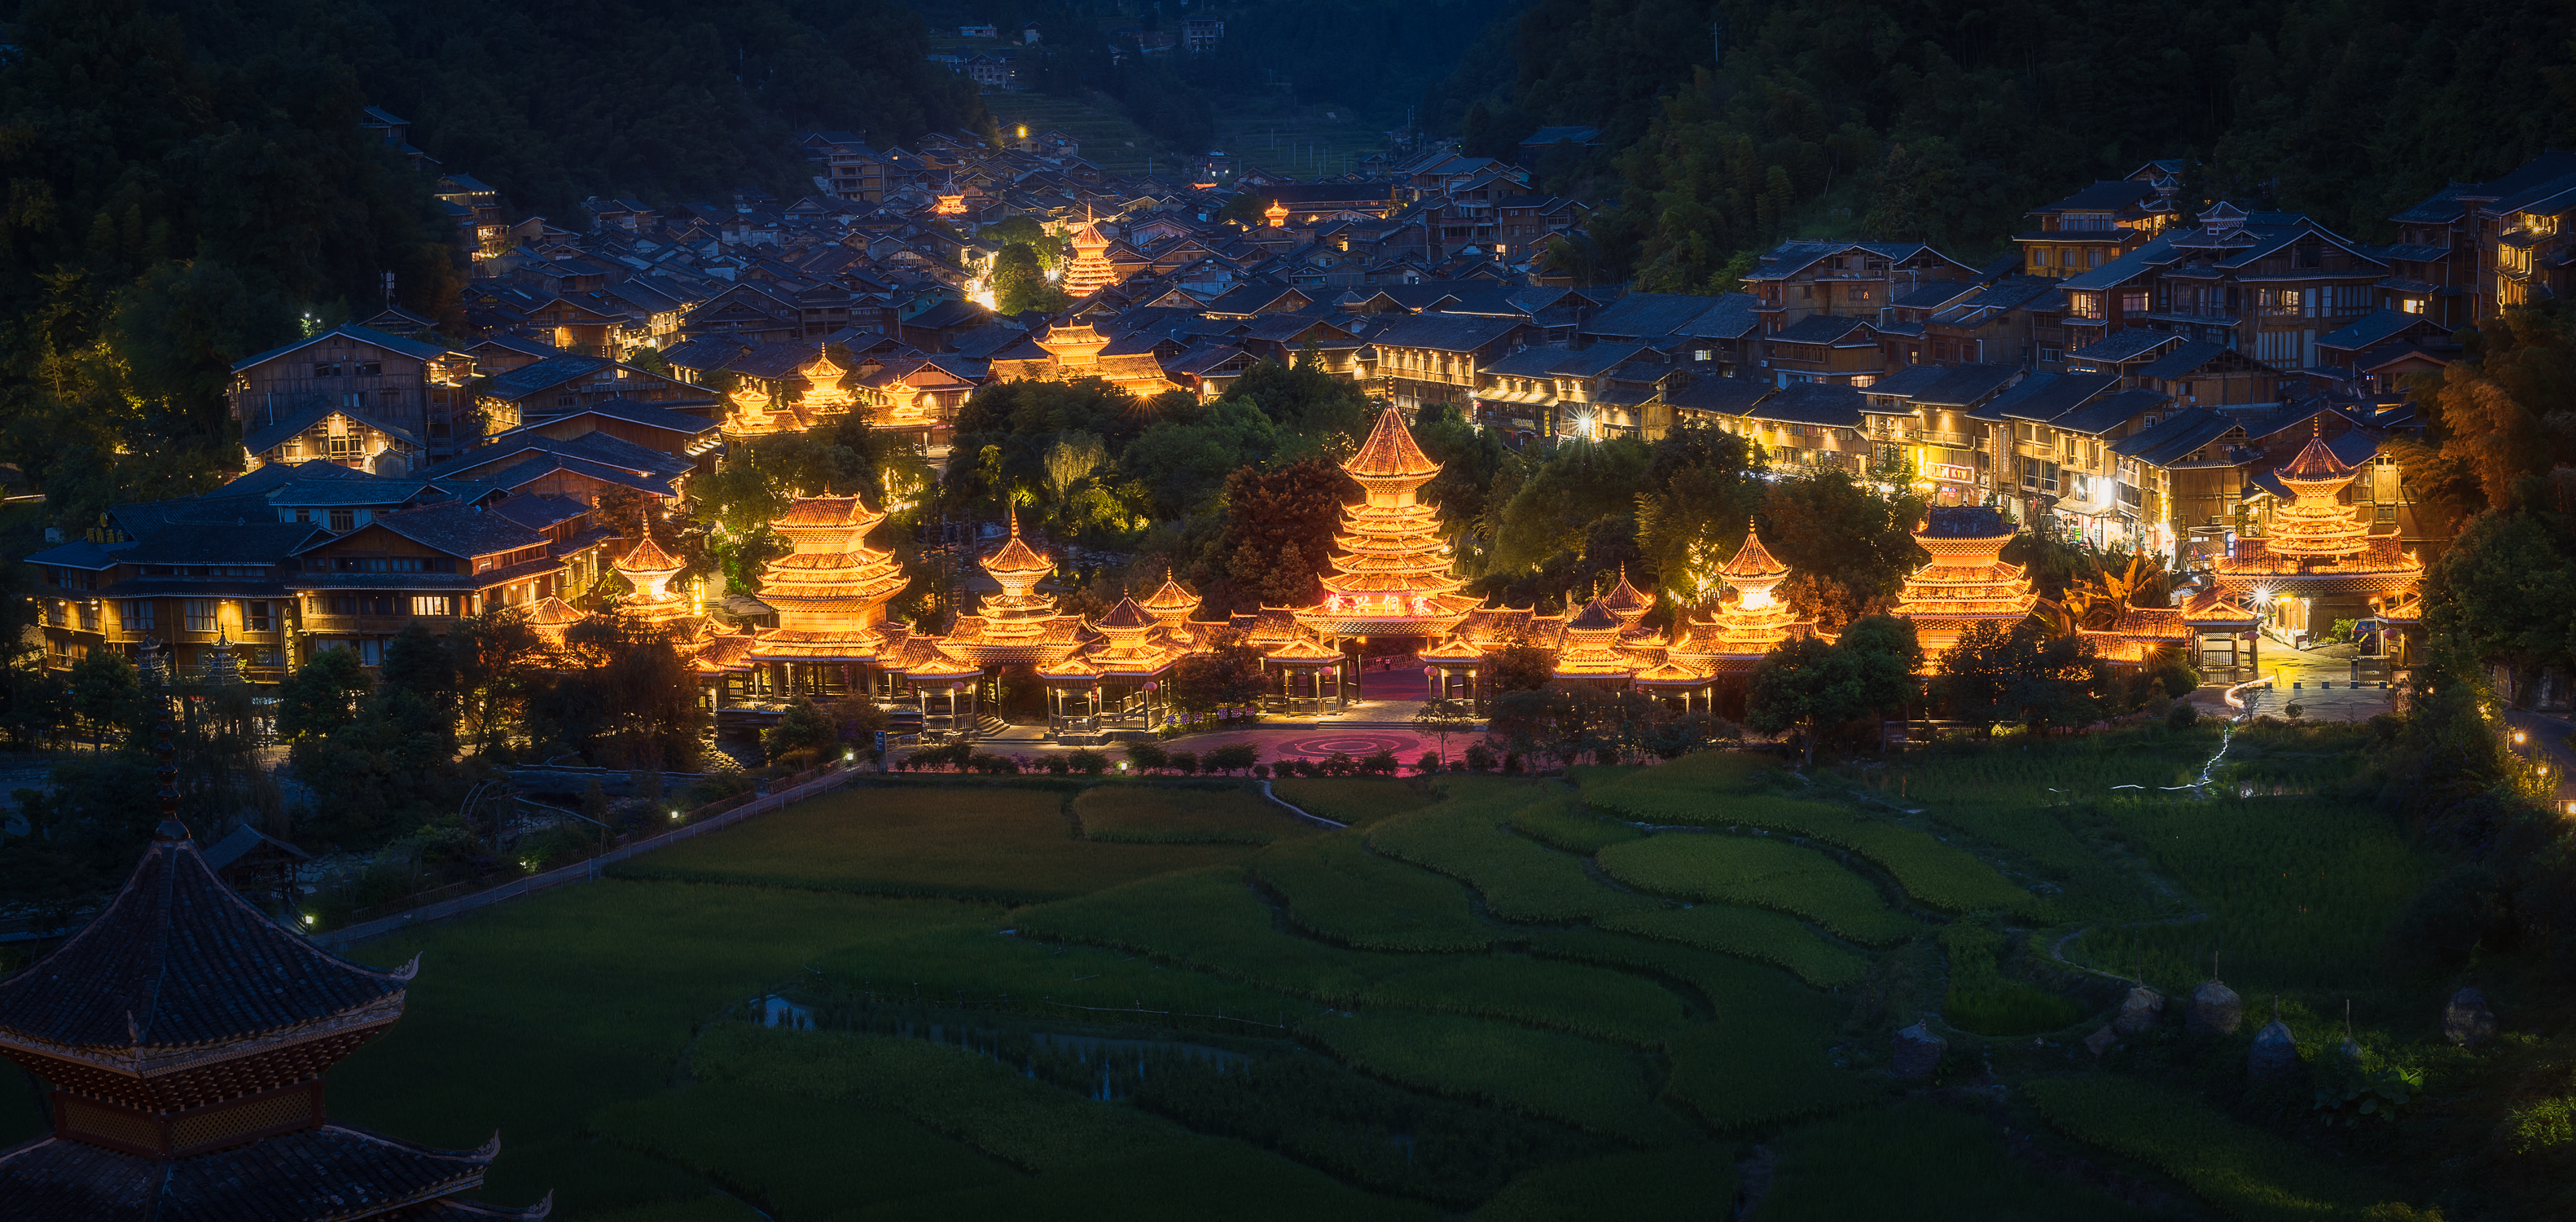 Zhaoxing Dong village at night